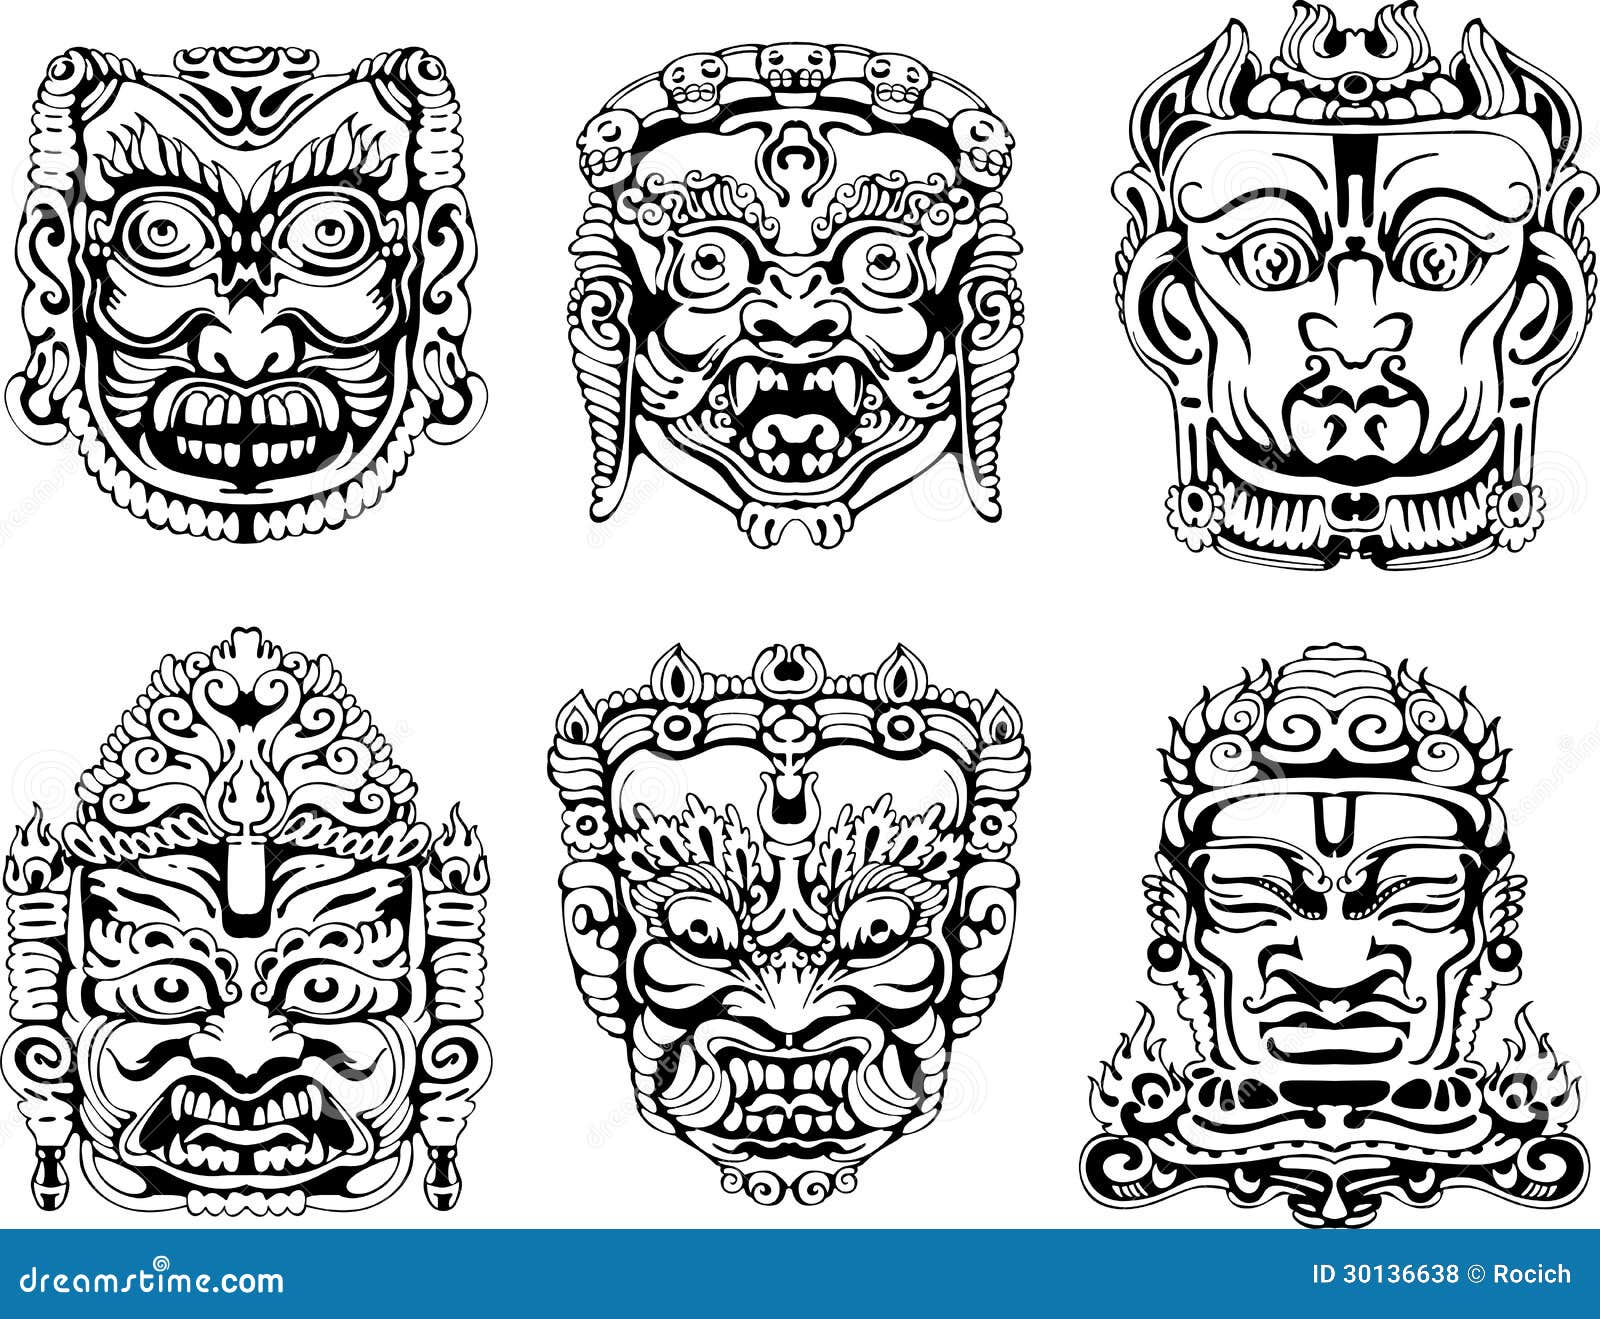 hindu deity masks